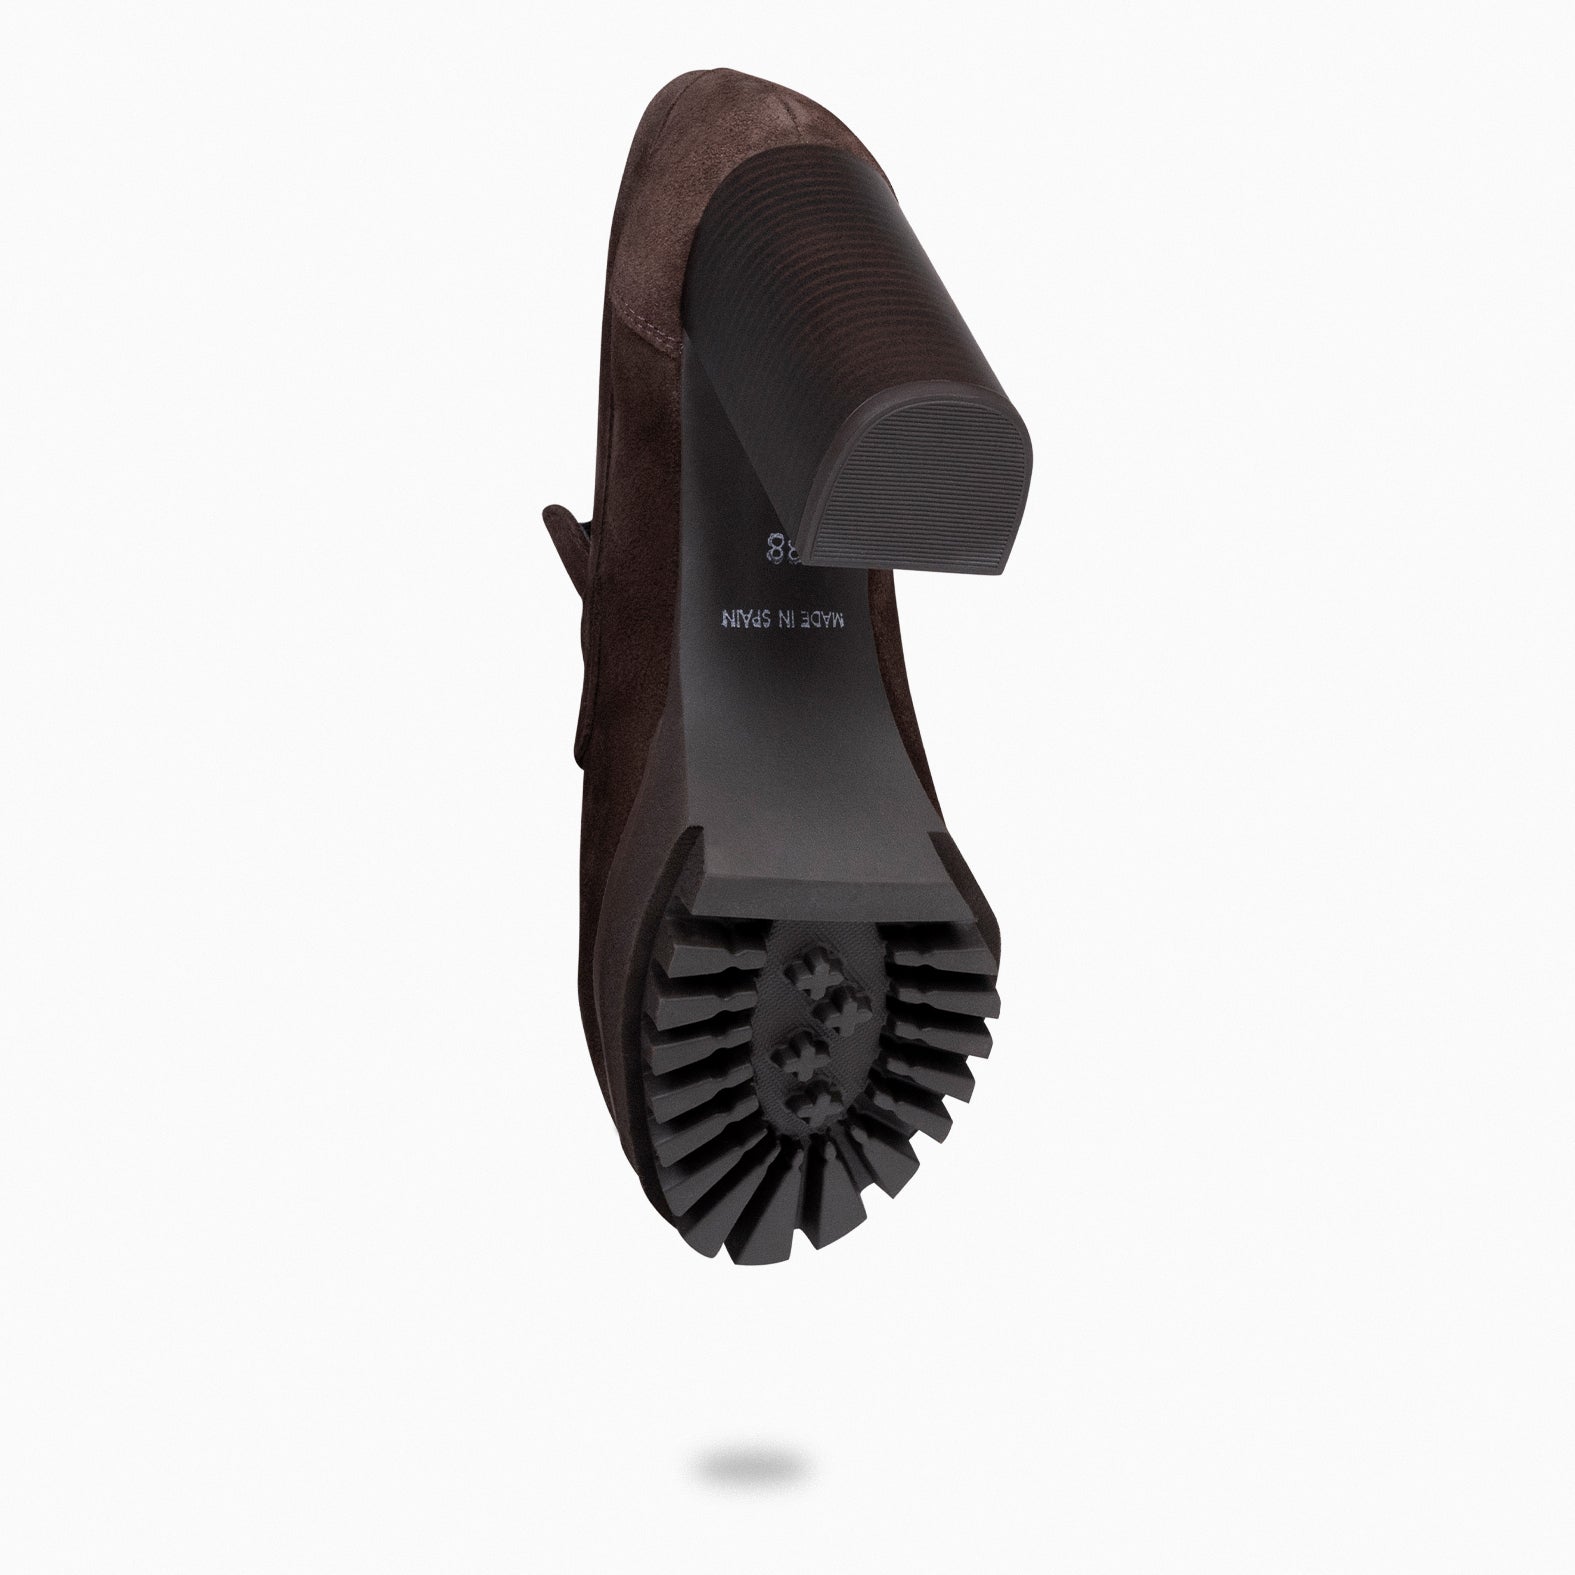 TREND – BROWN high heel moccasins with platform 